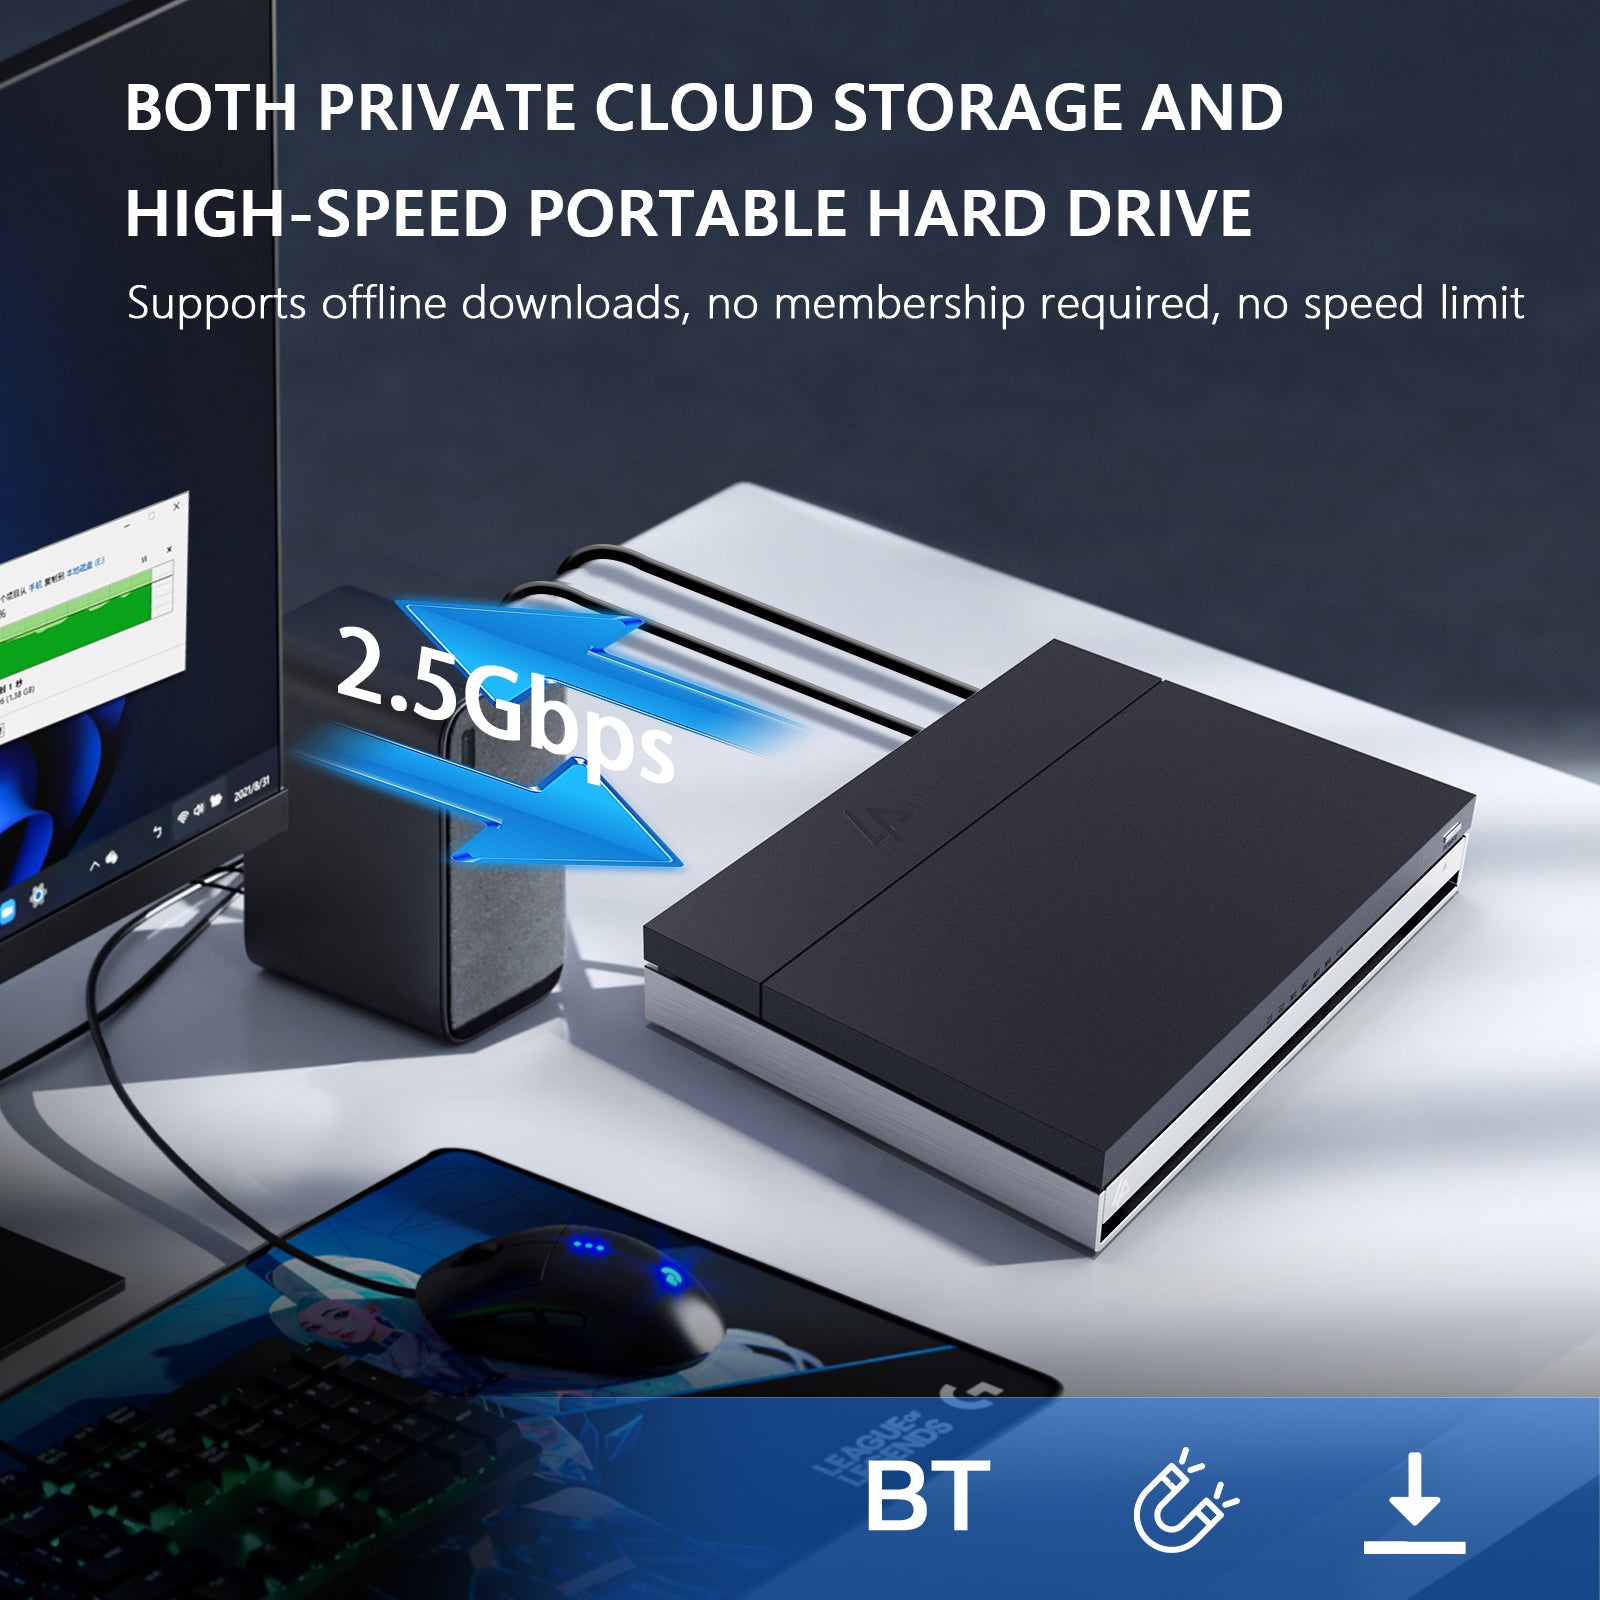 LincStation 【N1】 6-Bay NAS | Storage 6x8TB SSD